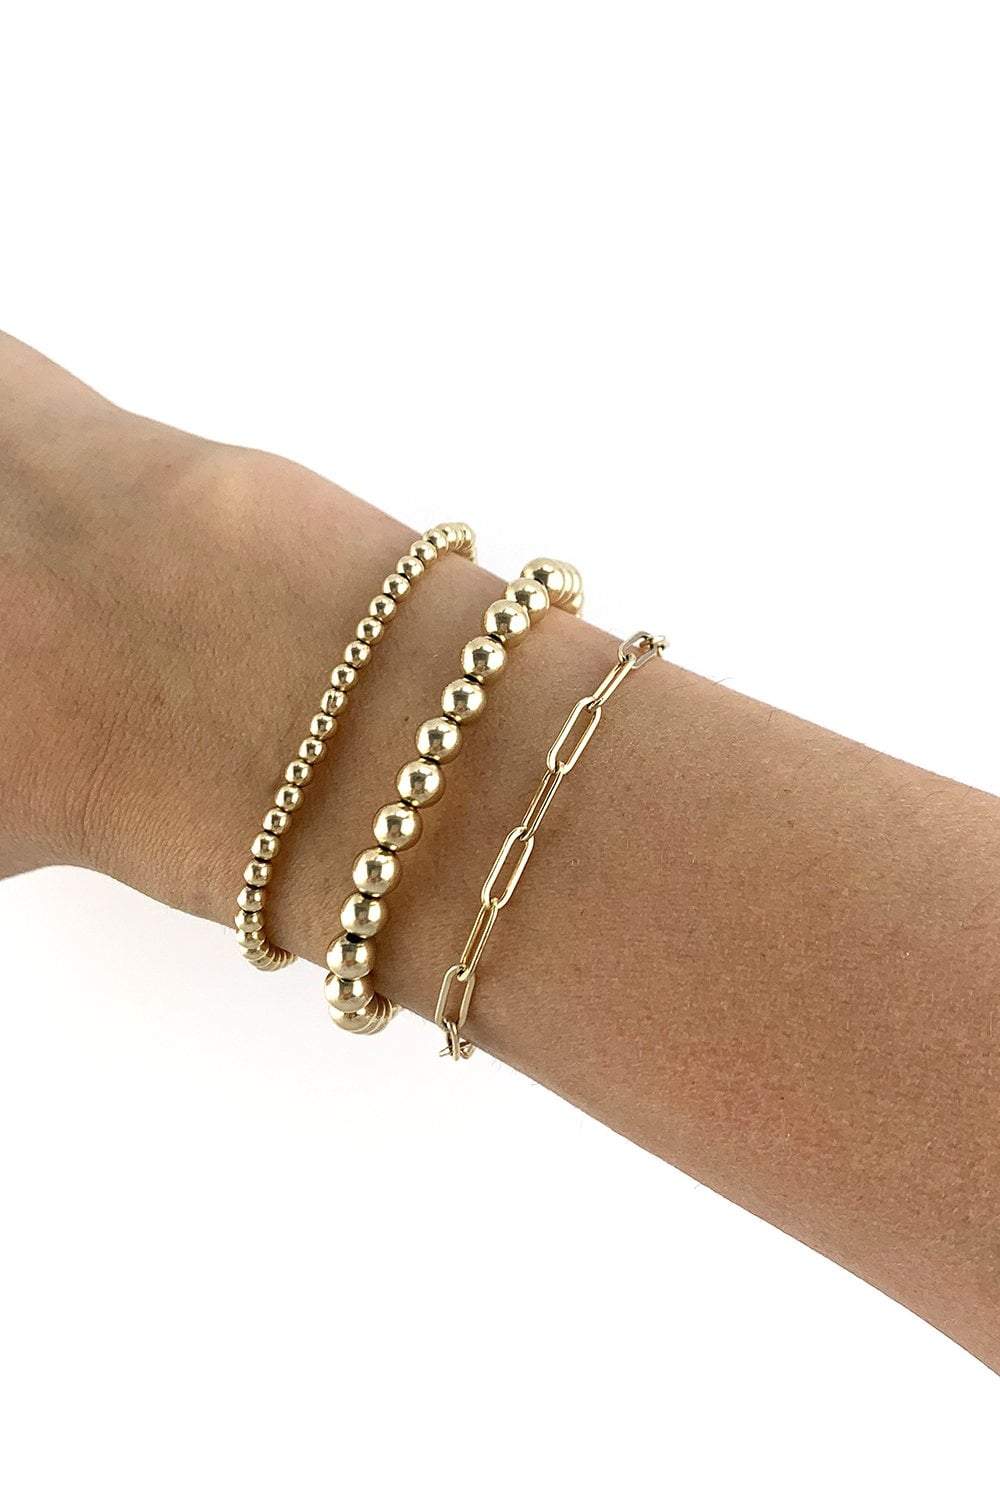 Round Gold Beaded Bracelet - Sarah Marie Design Studio